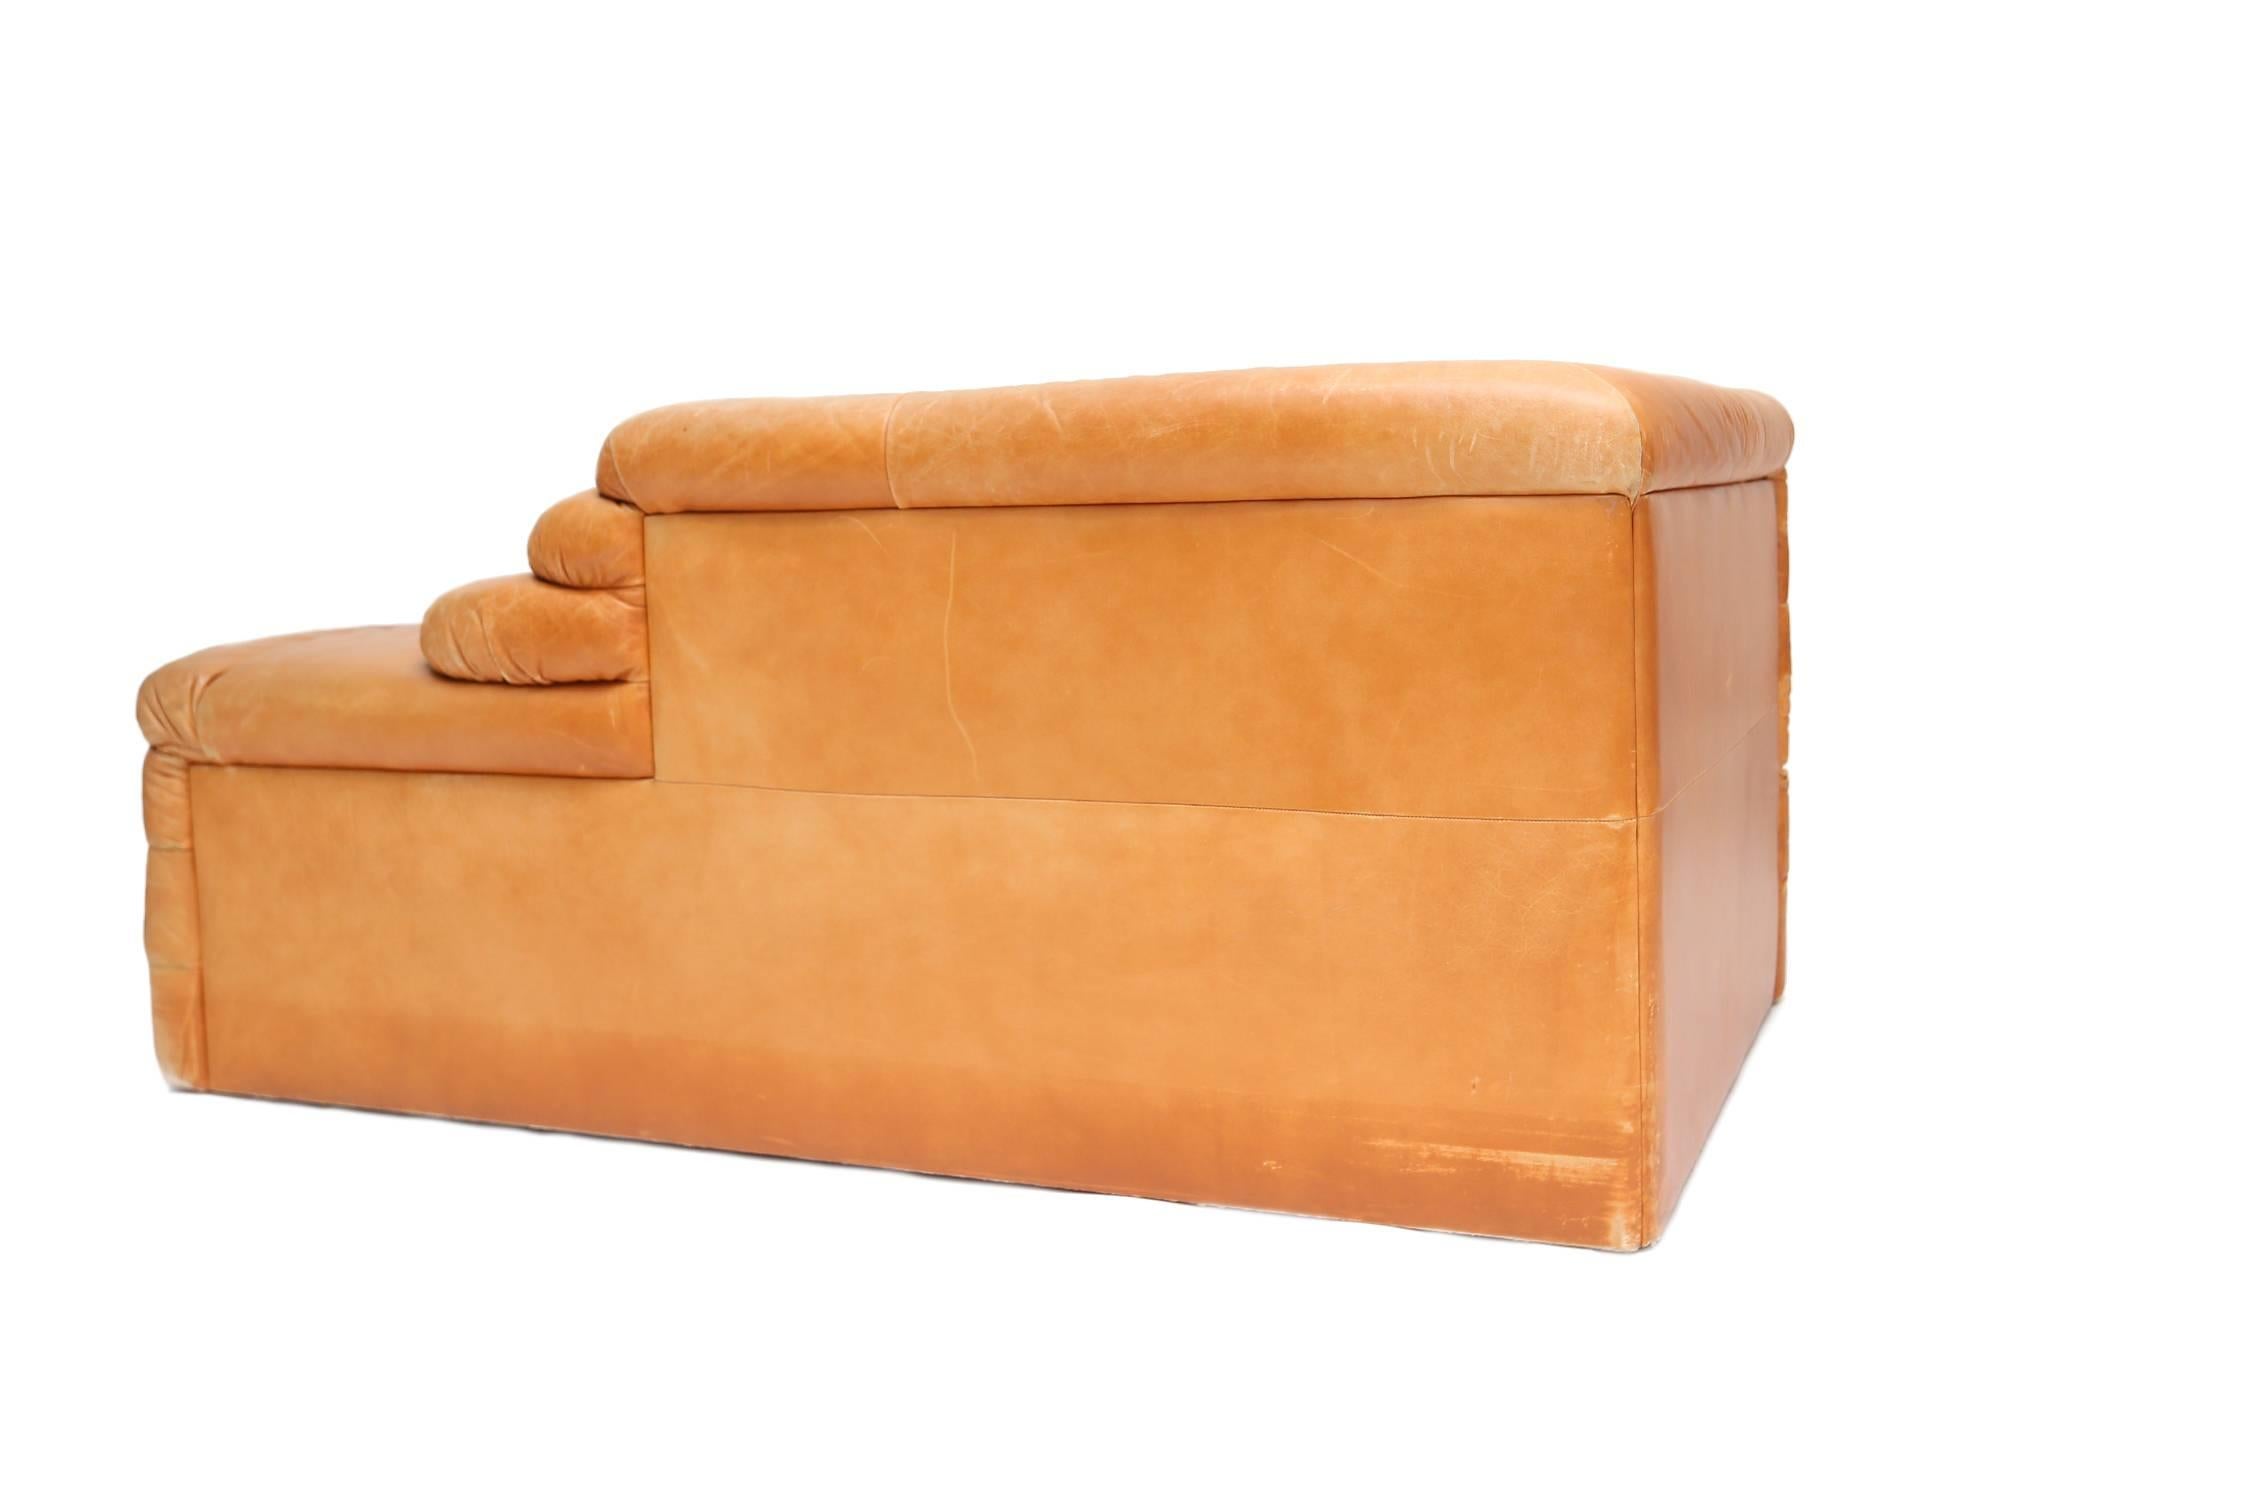 Cognac leather seating element, model Terrazza
designed by Ubald Klug for De Sede,
Switzerland, 1970s.
Measures: 69 cm H, 87 cm W, 156 cm L.